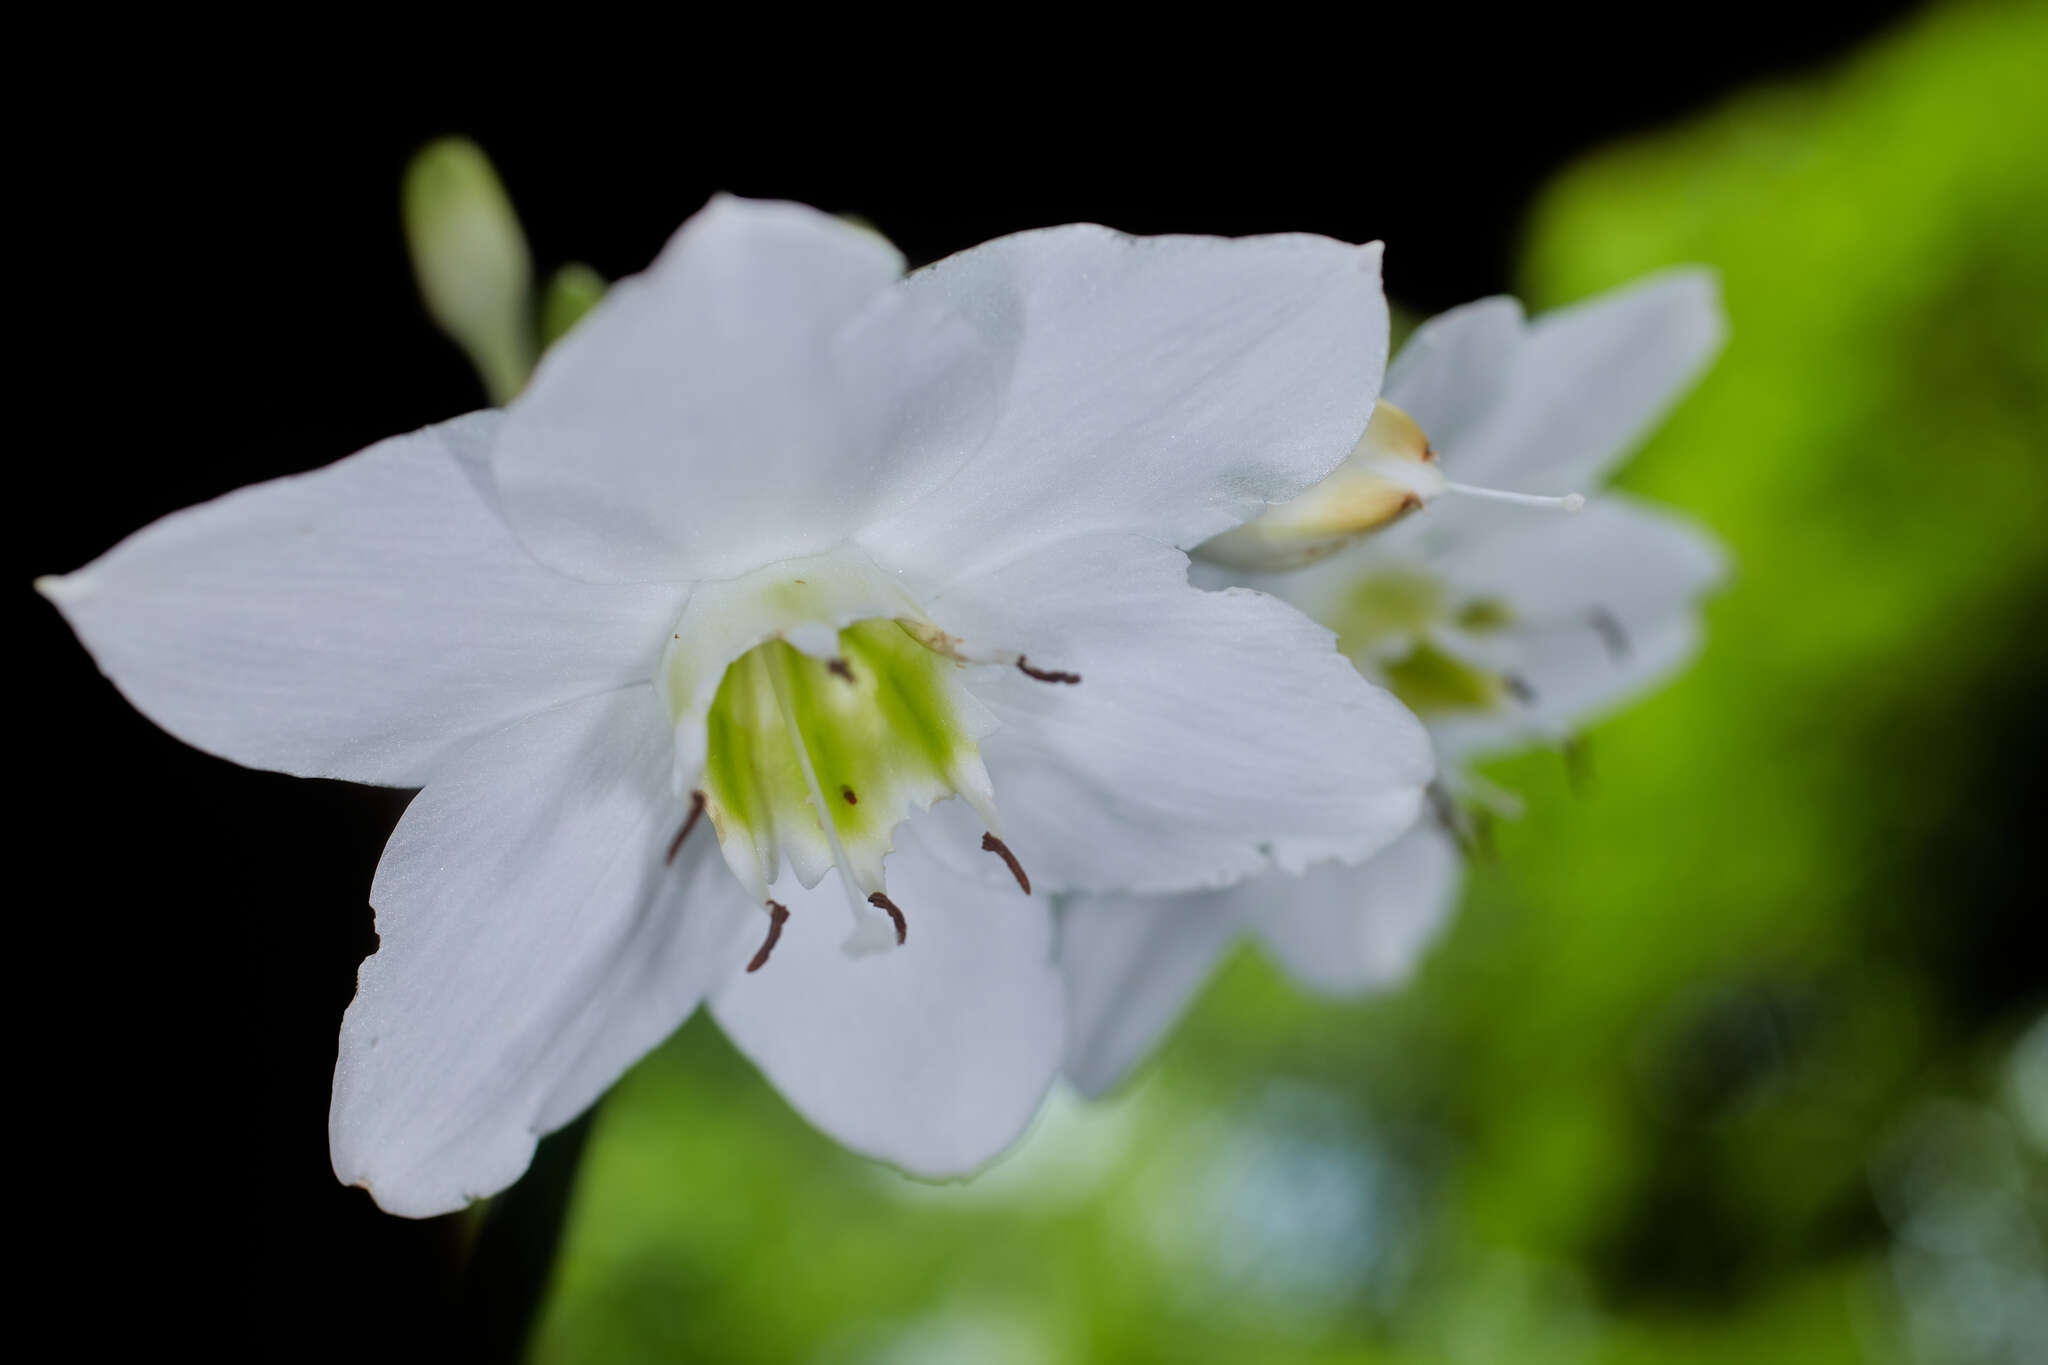 Image of Amazon lily